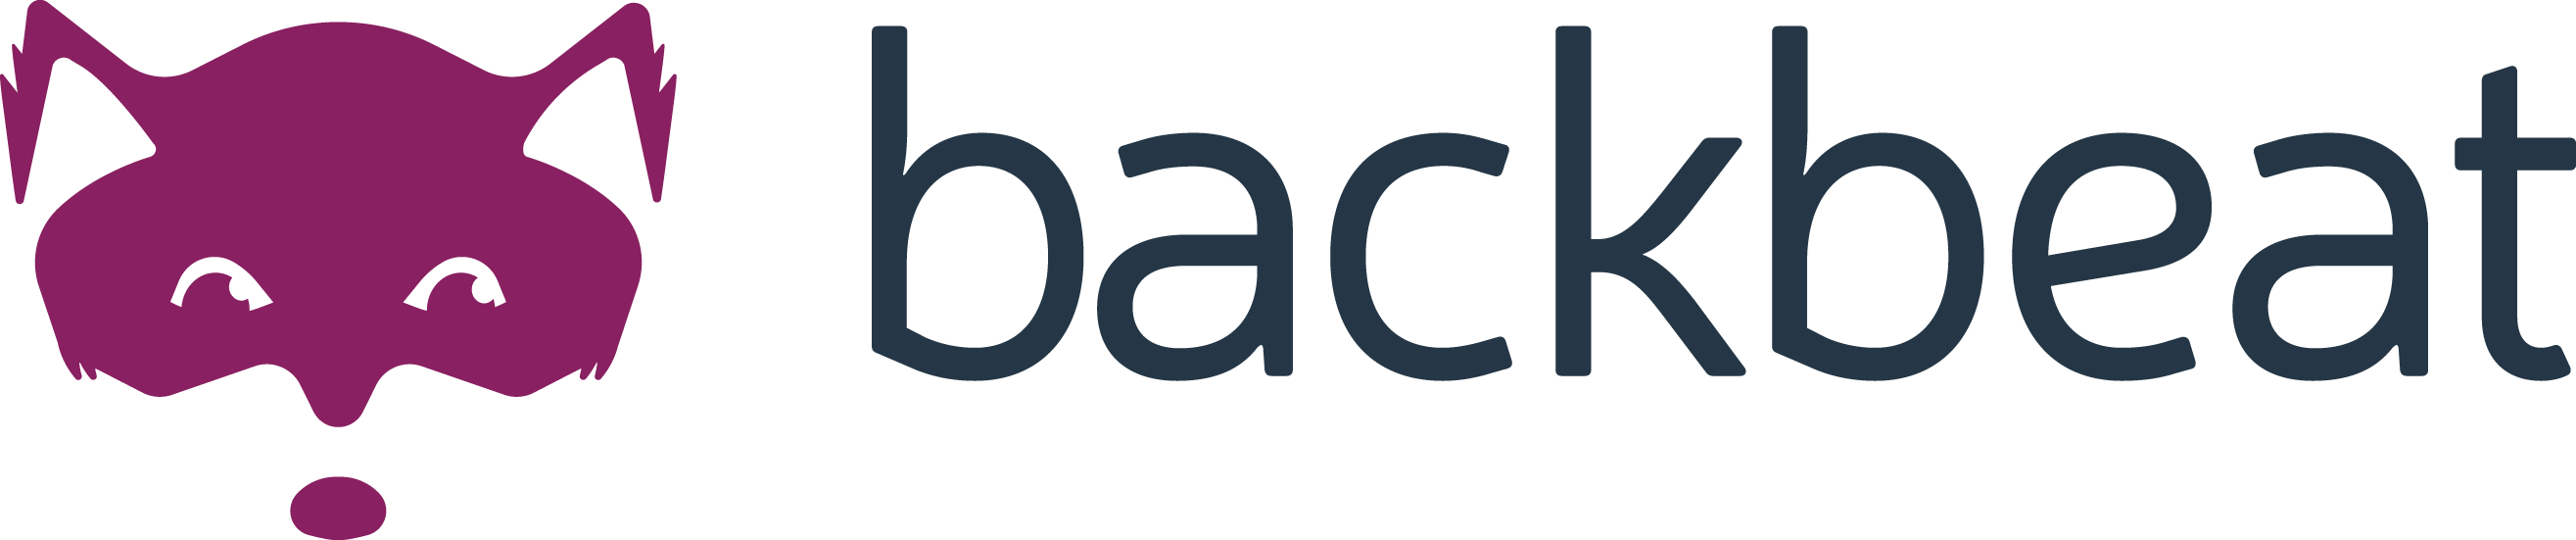 backbeat logo